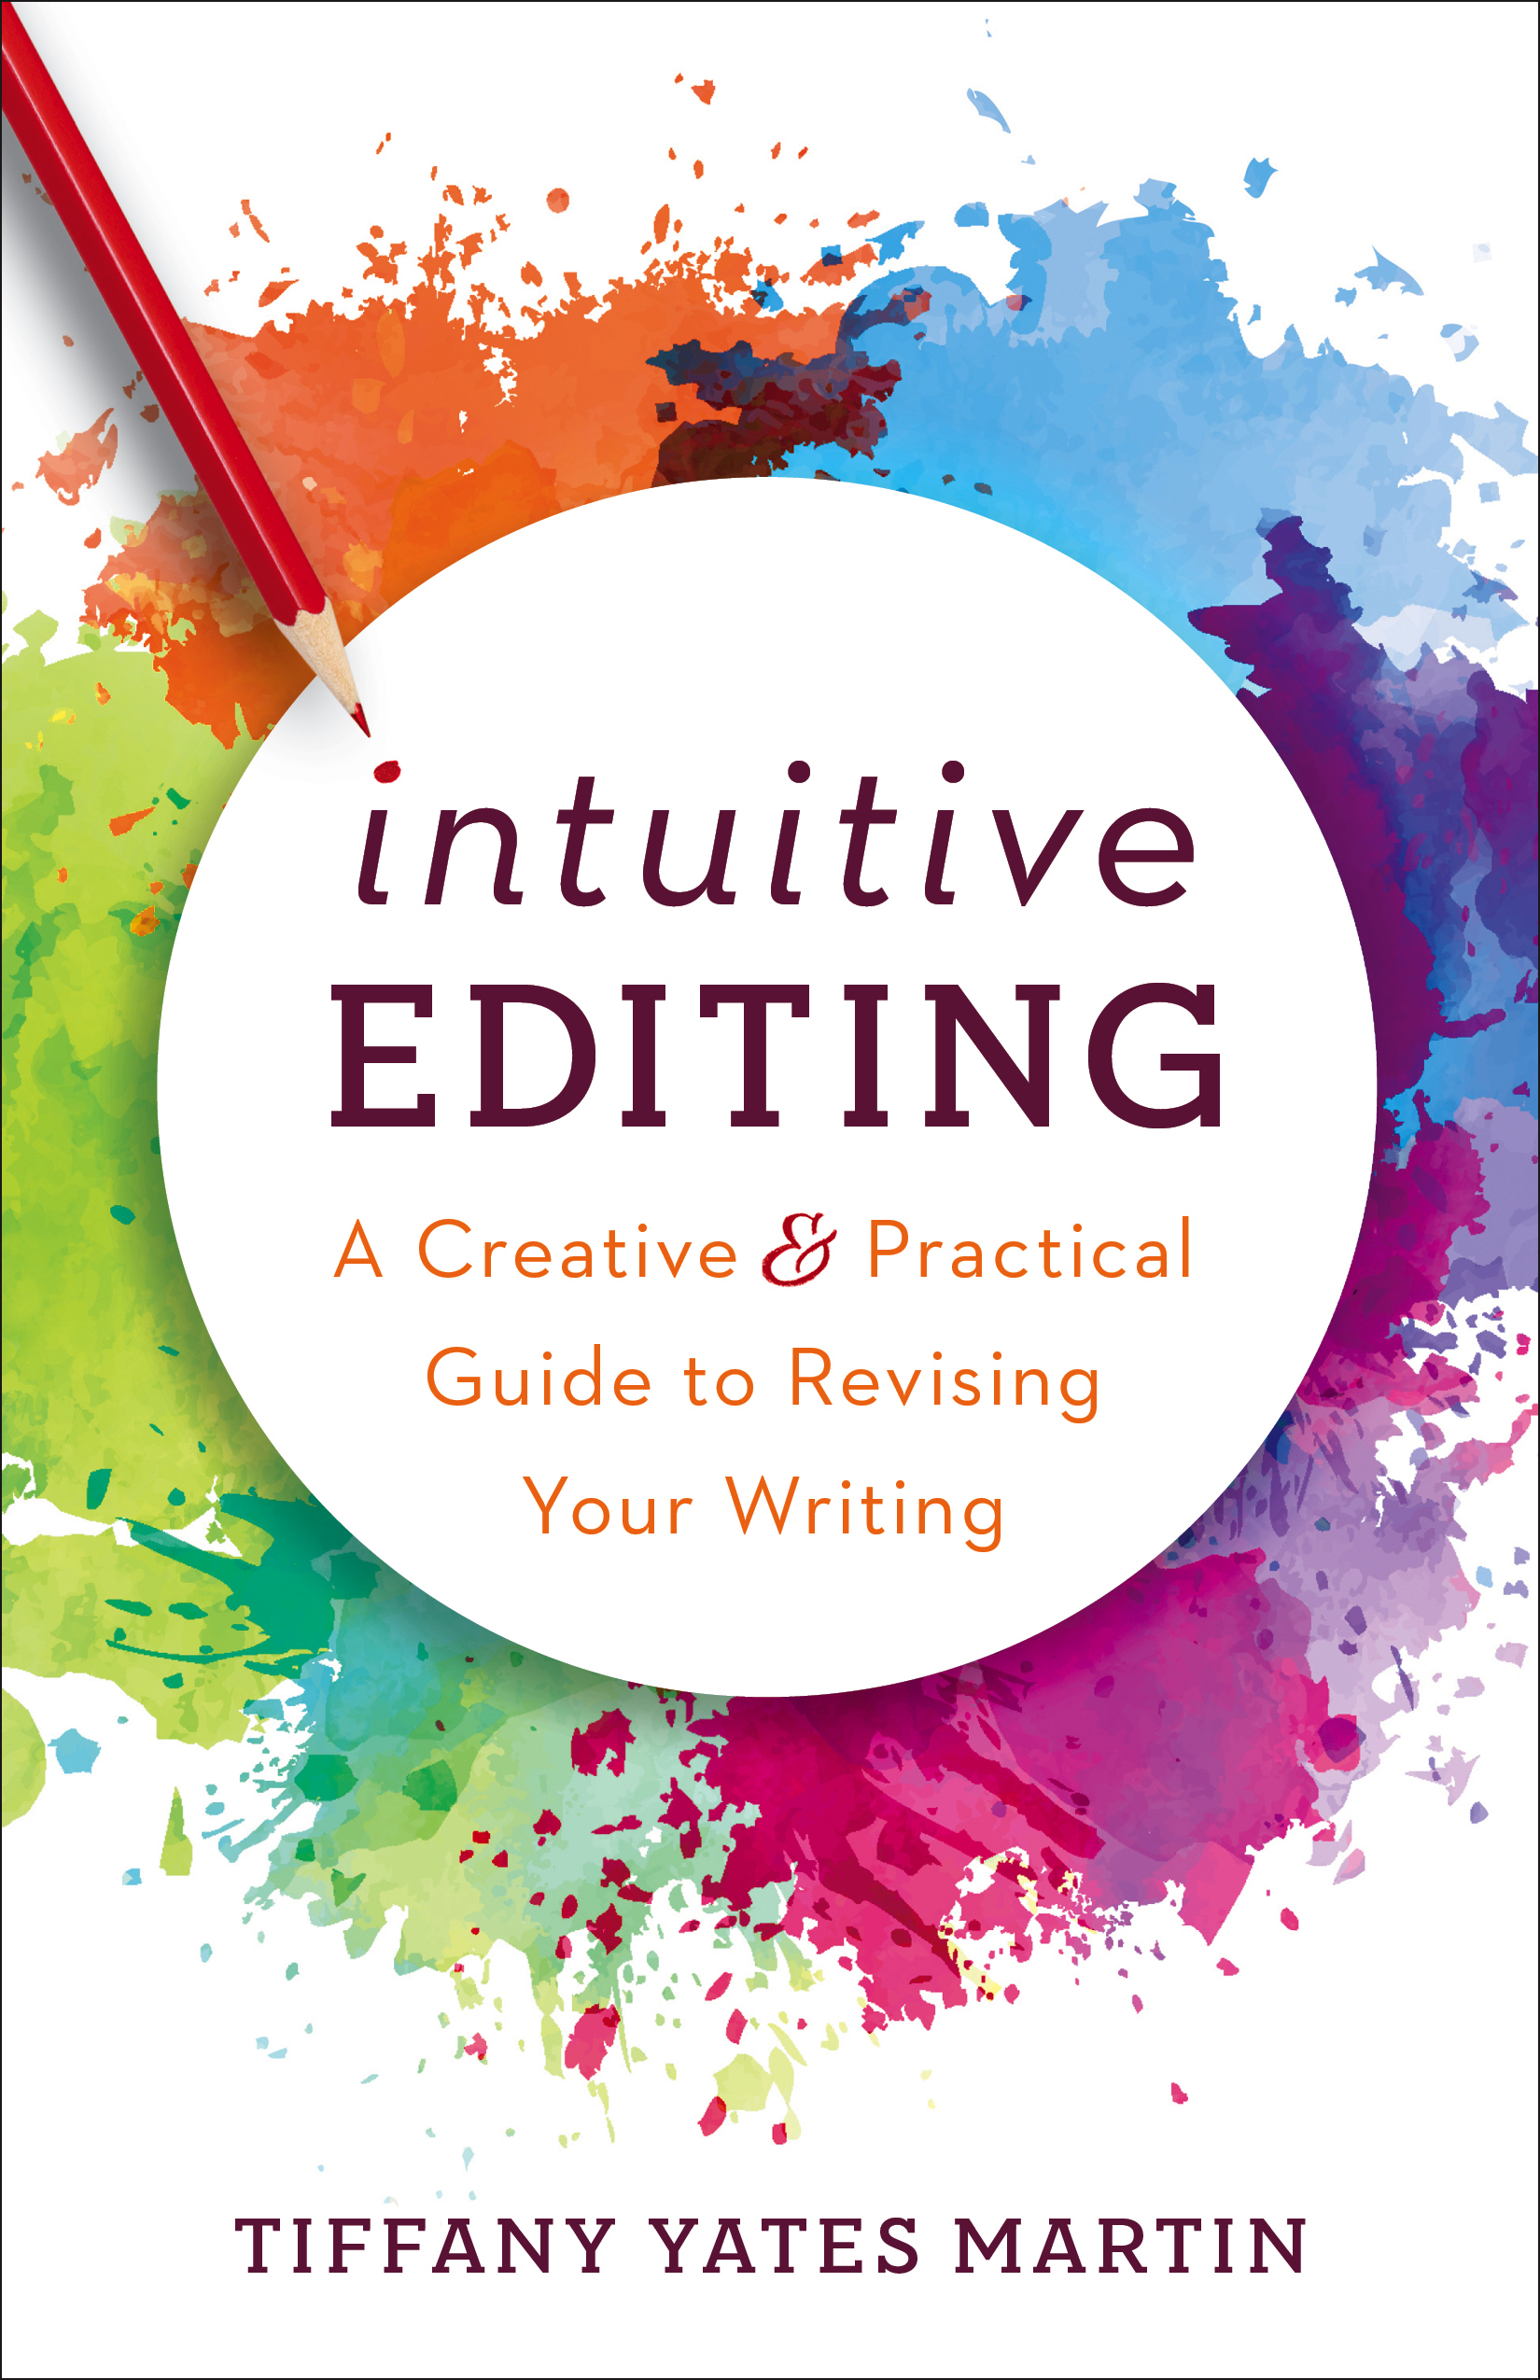 Intuitive Editing by Tiffany Yates Martin